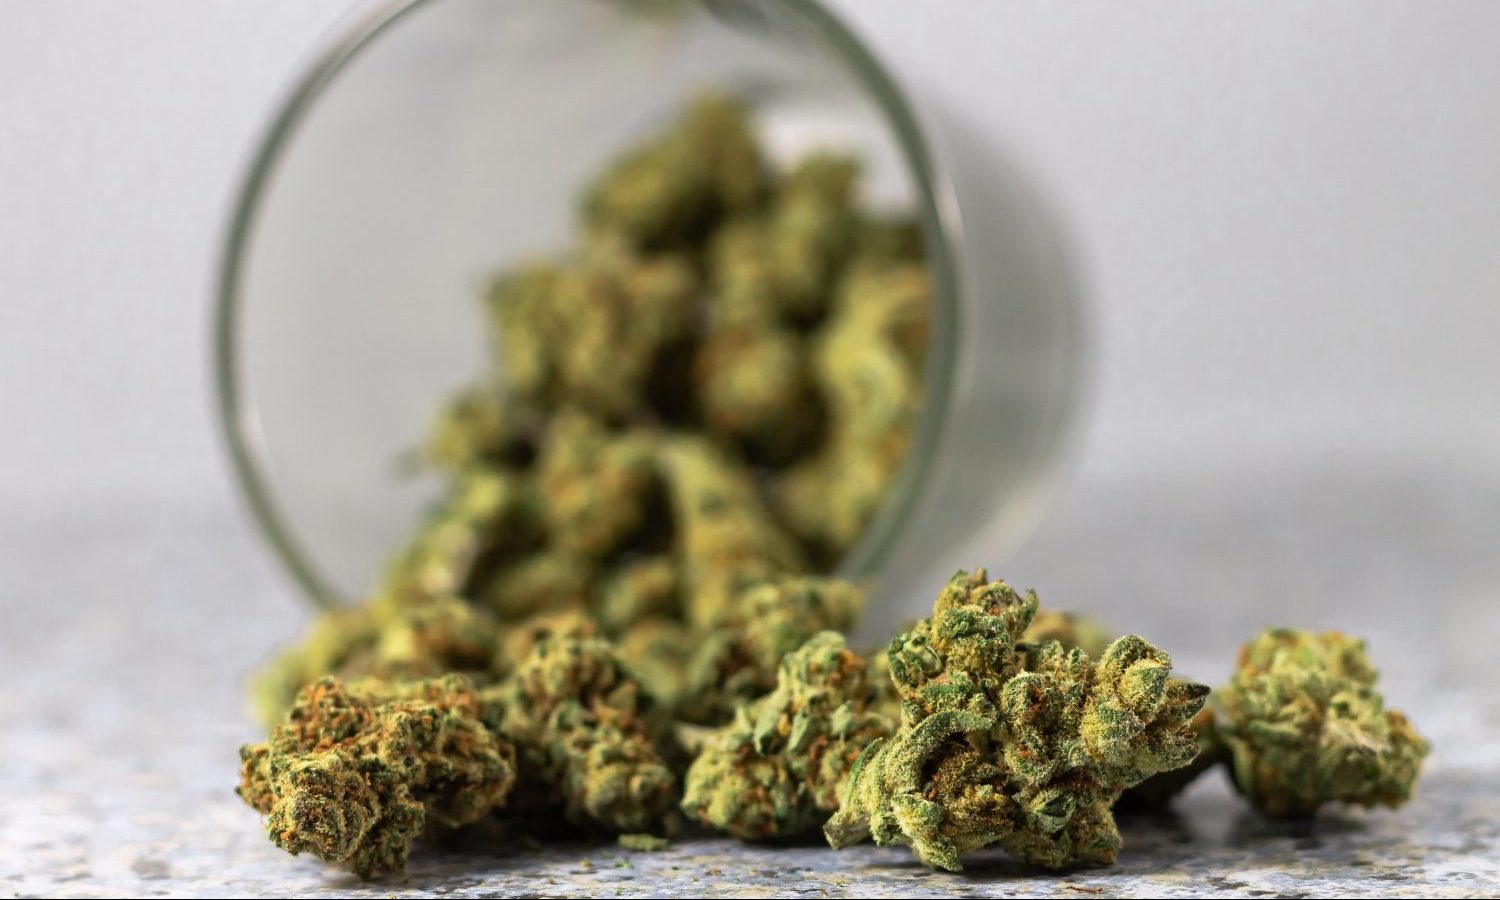 Survey Says America's Favorite Way To Kick Opiates Is Cannabis